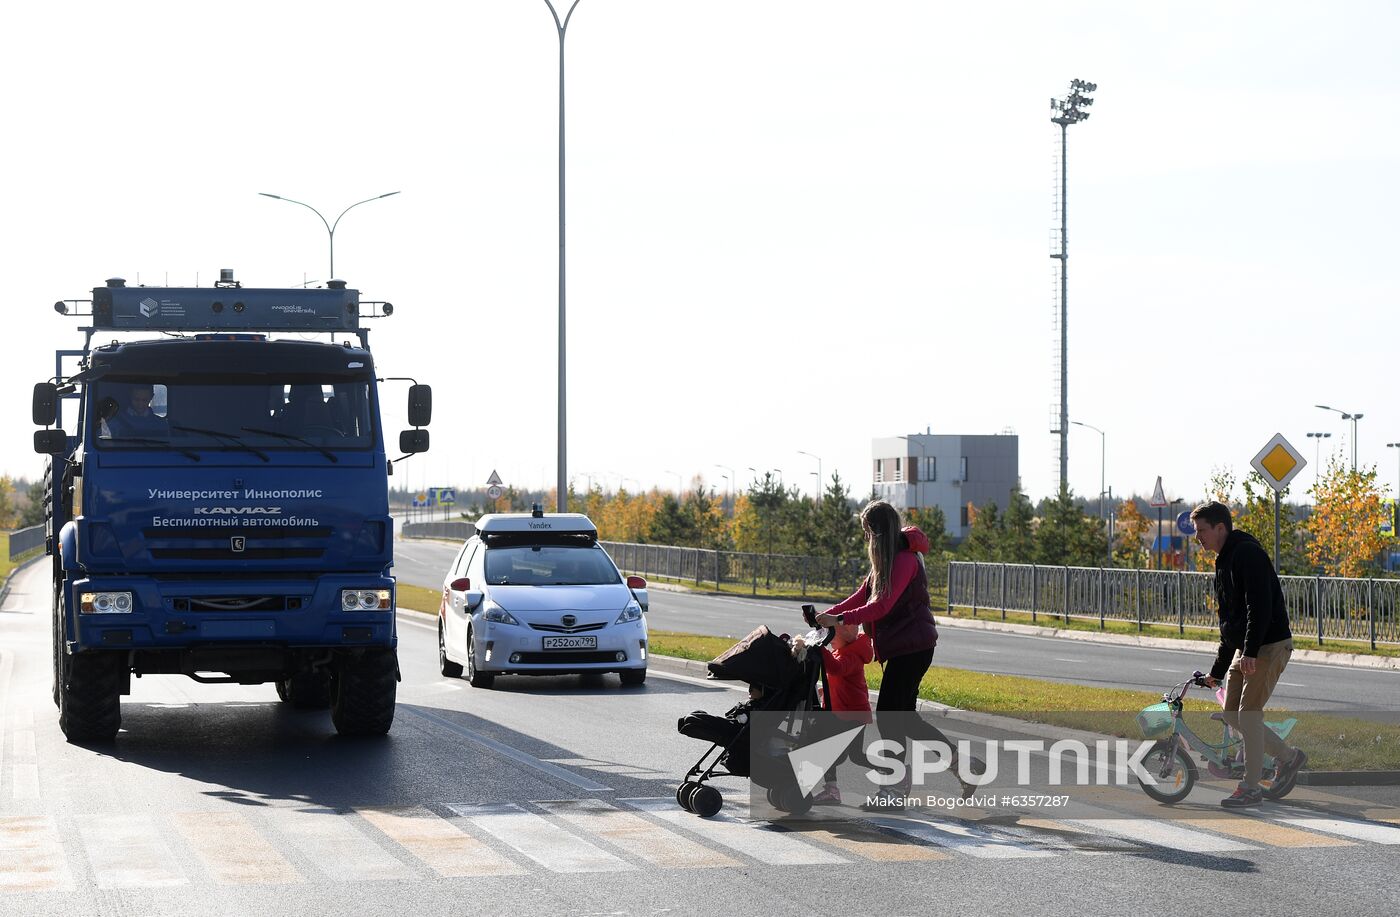 Russia Self-driving Truck